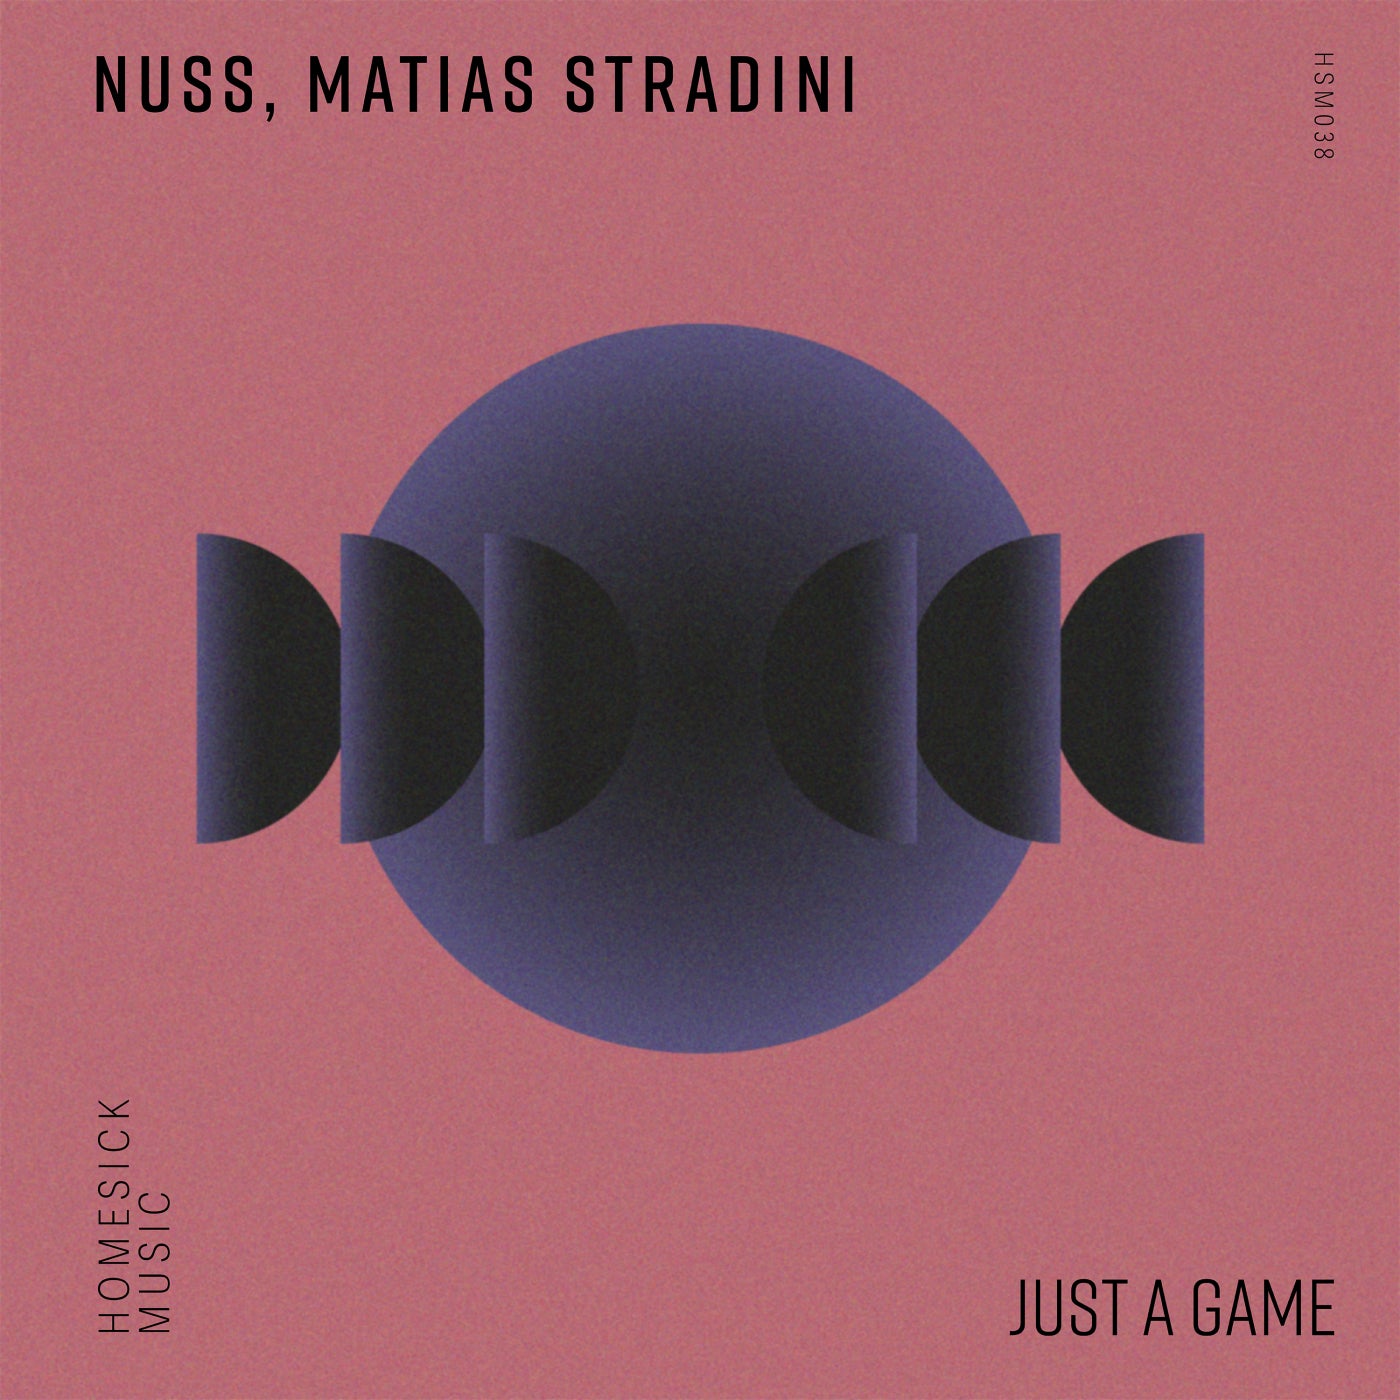 Nuss, Matias Stradini – Just a Game [HSM038]